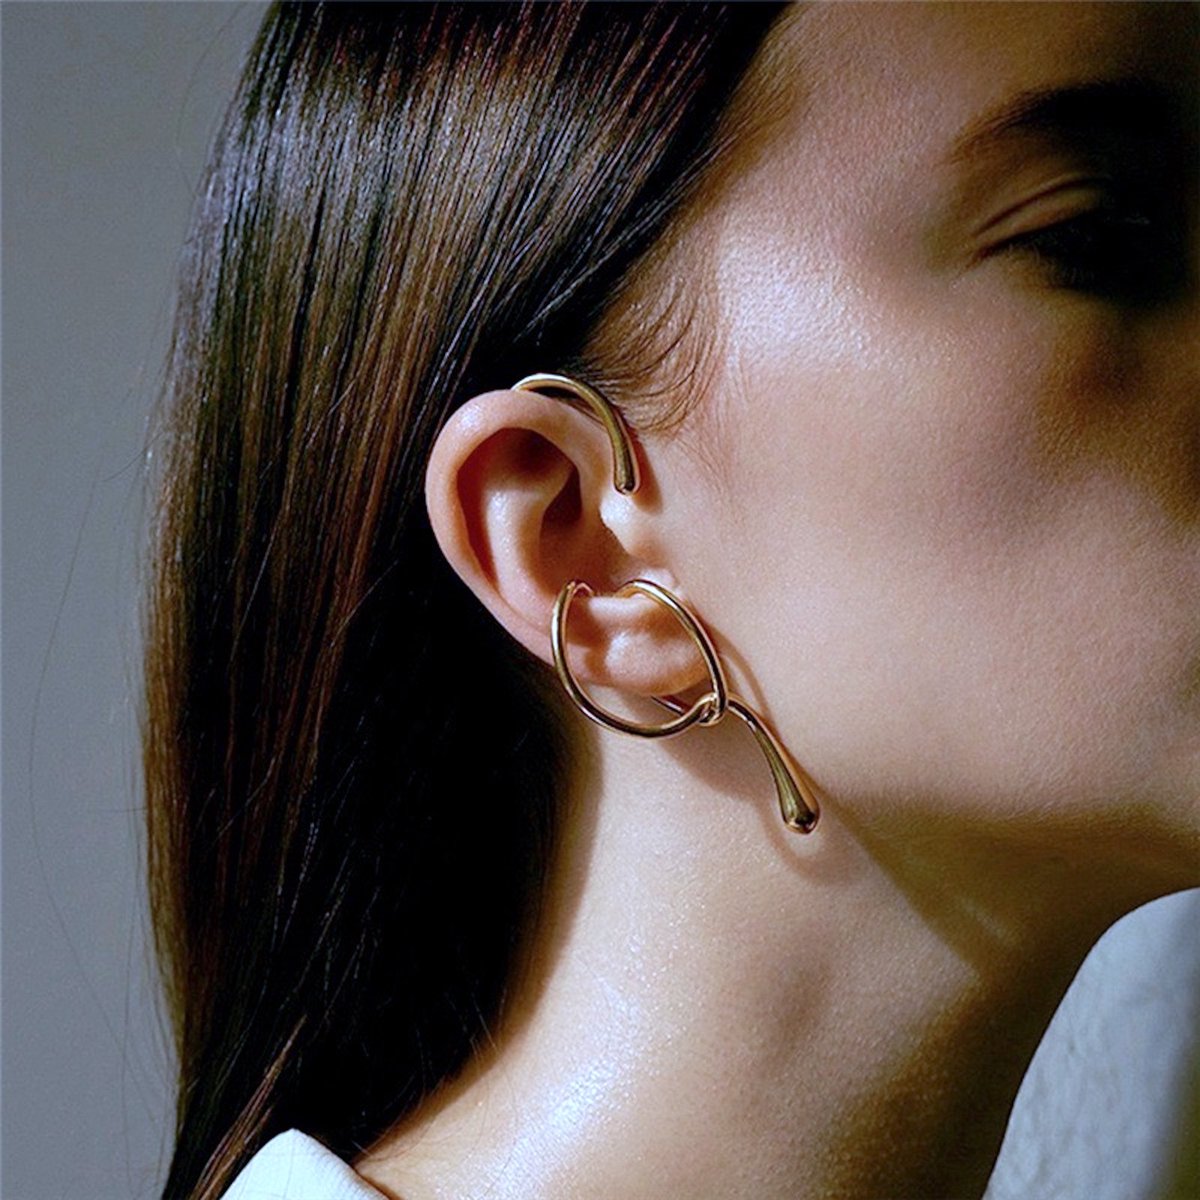 Uniek ontwerp met vloeiende lijn grote oormanchet uit één stuk-goud-right ear